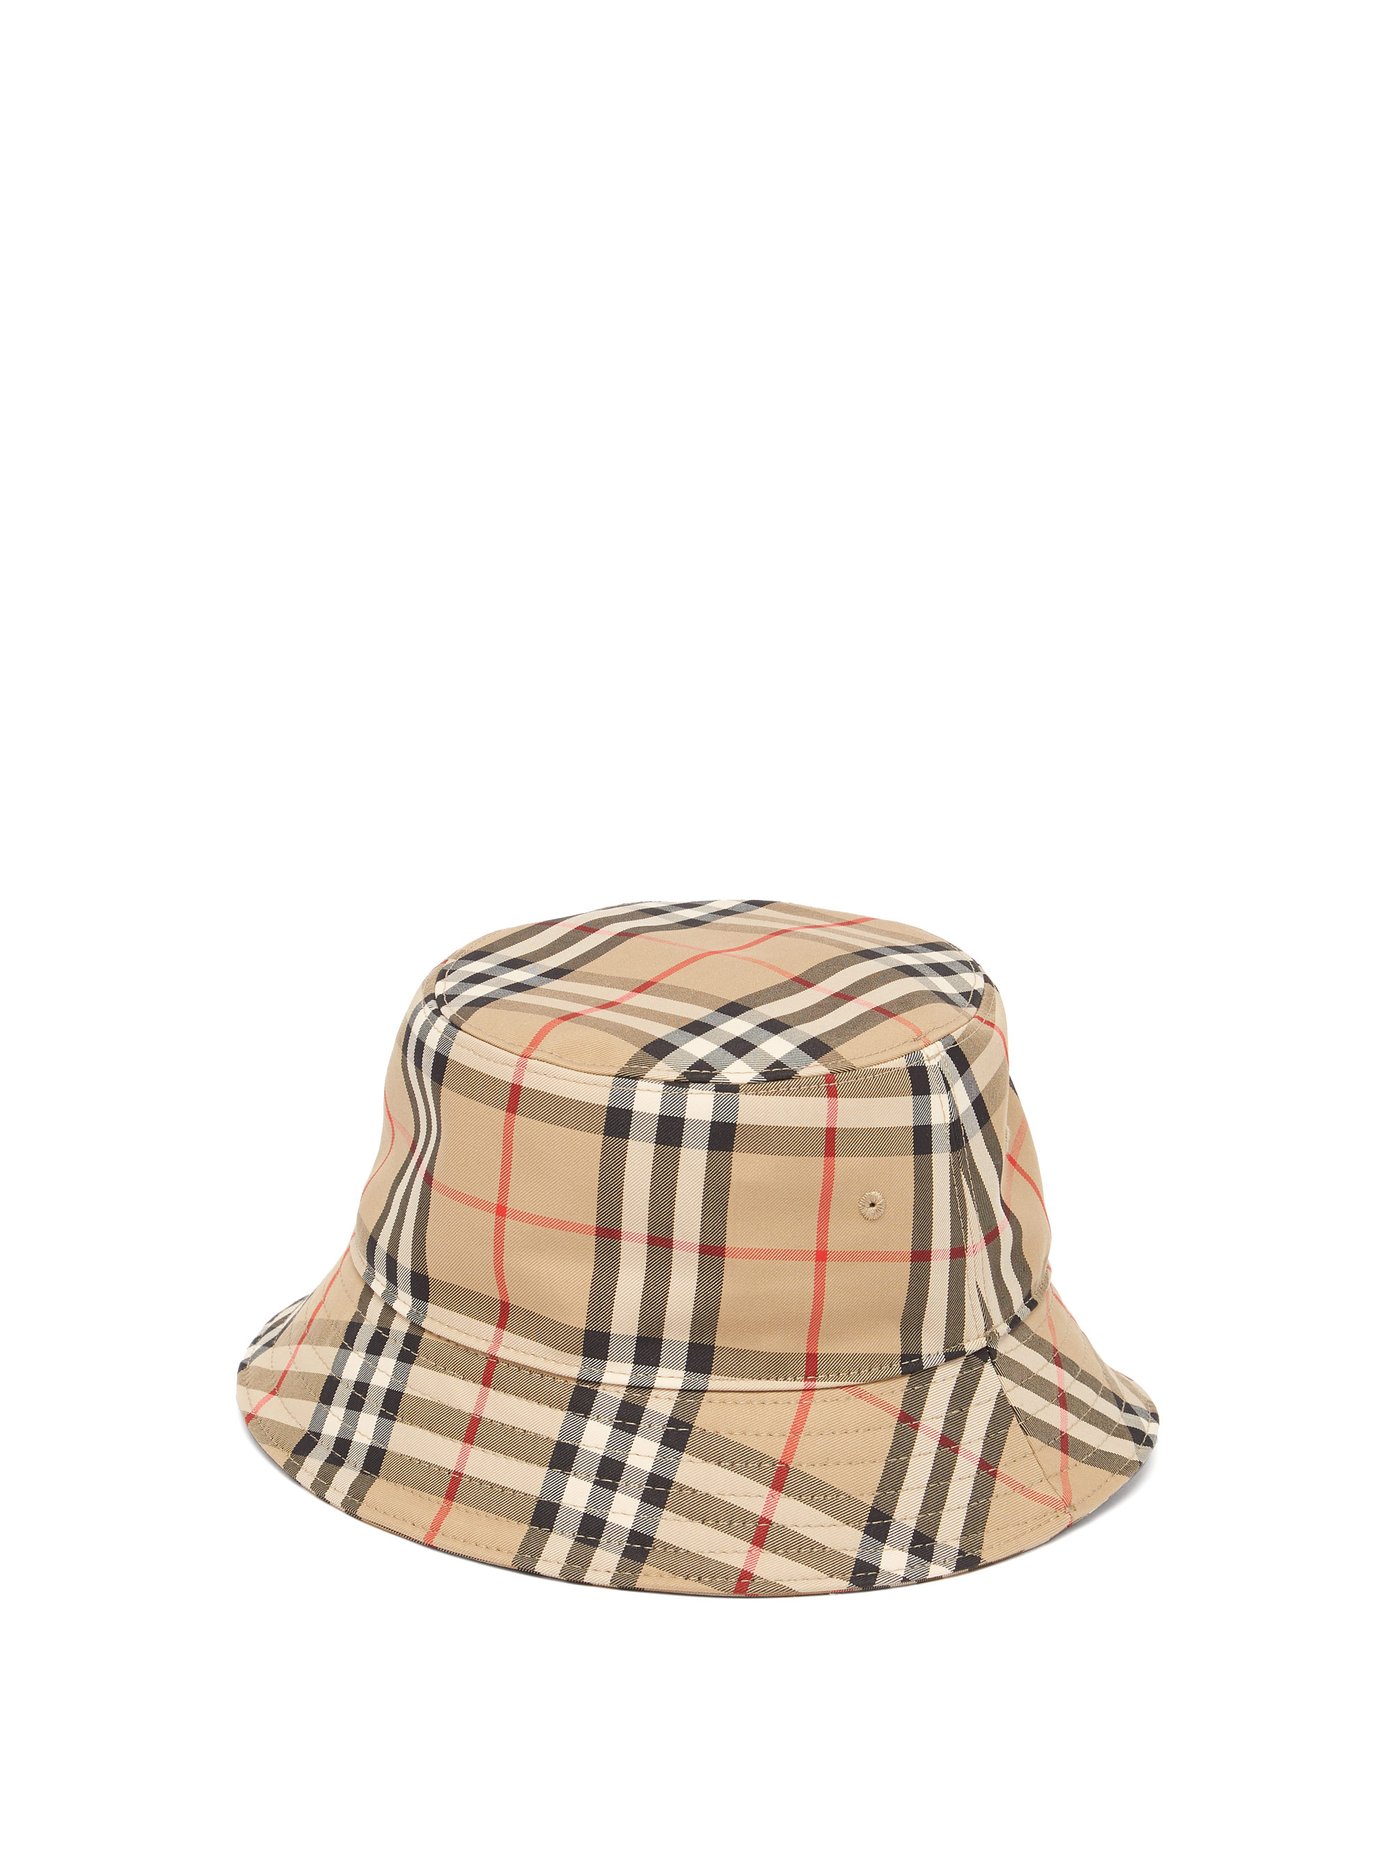 Burberry Vintage Hat Top Sellers, 59% OFF | lagence.tv